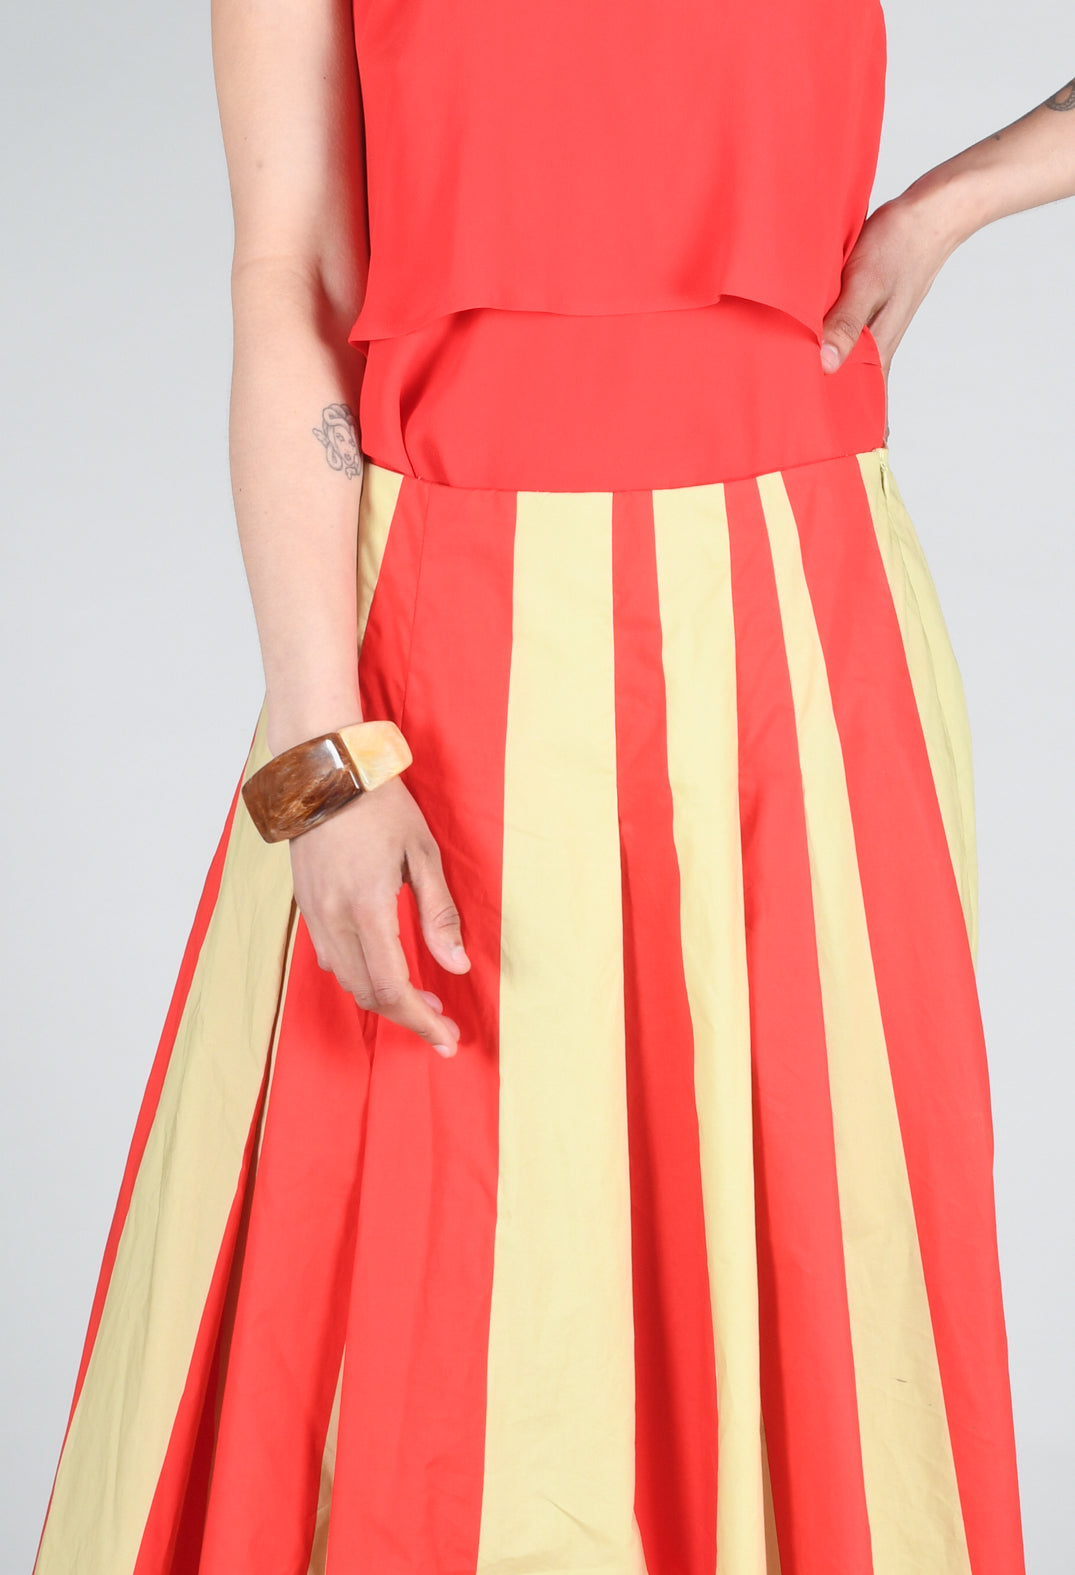 Striped Skirt in Line Print